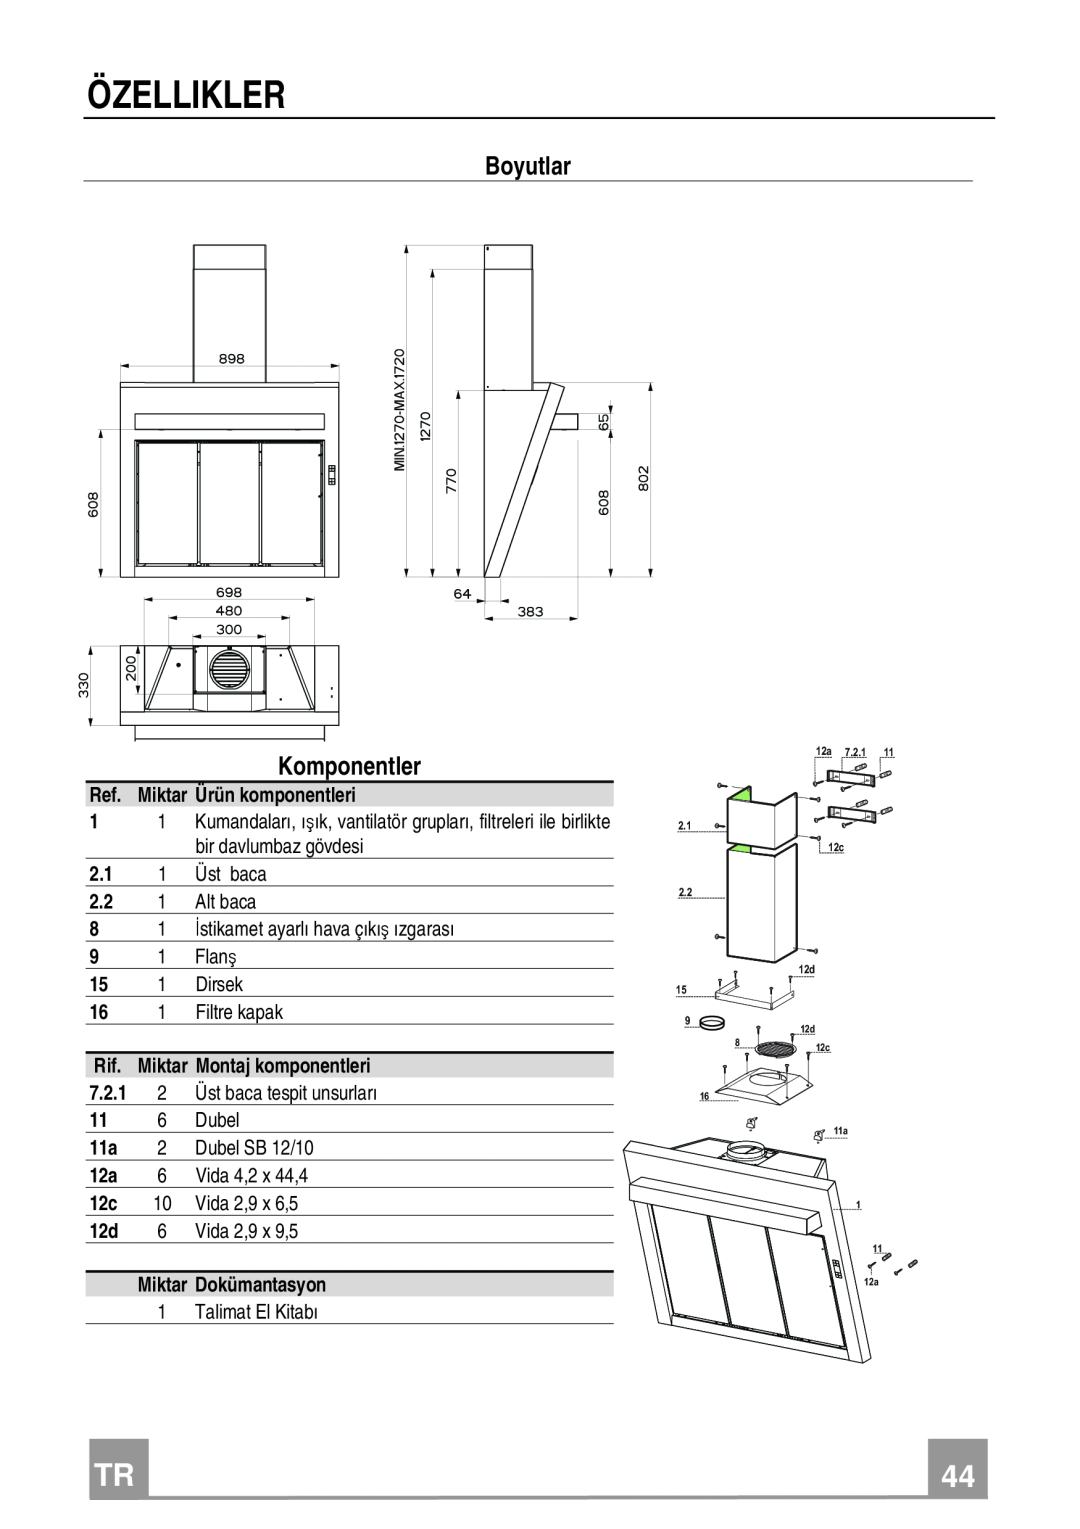 Franke Consumer Products FQD 907 manual Özellikler, Boyutlar, Komponentler 